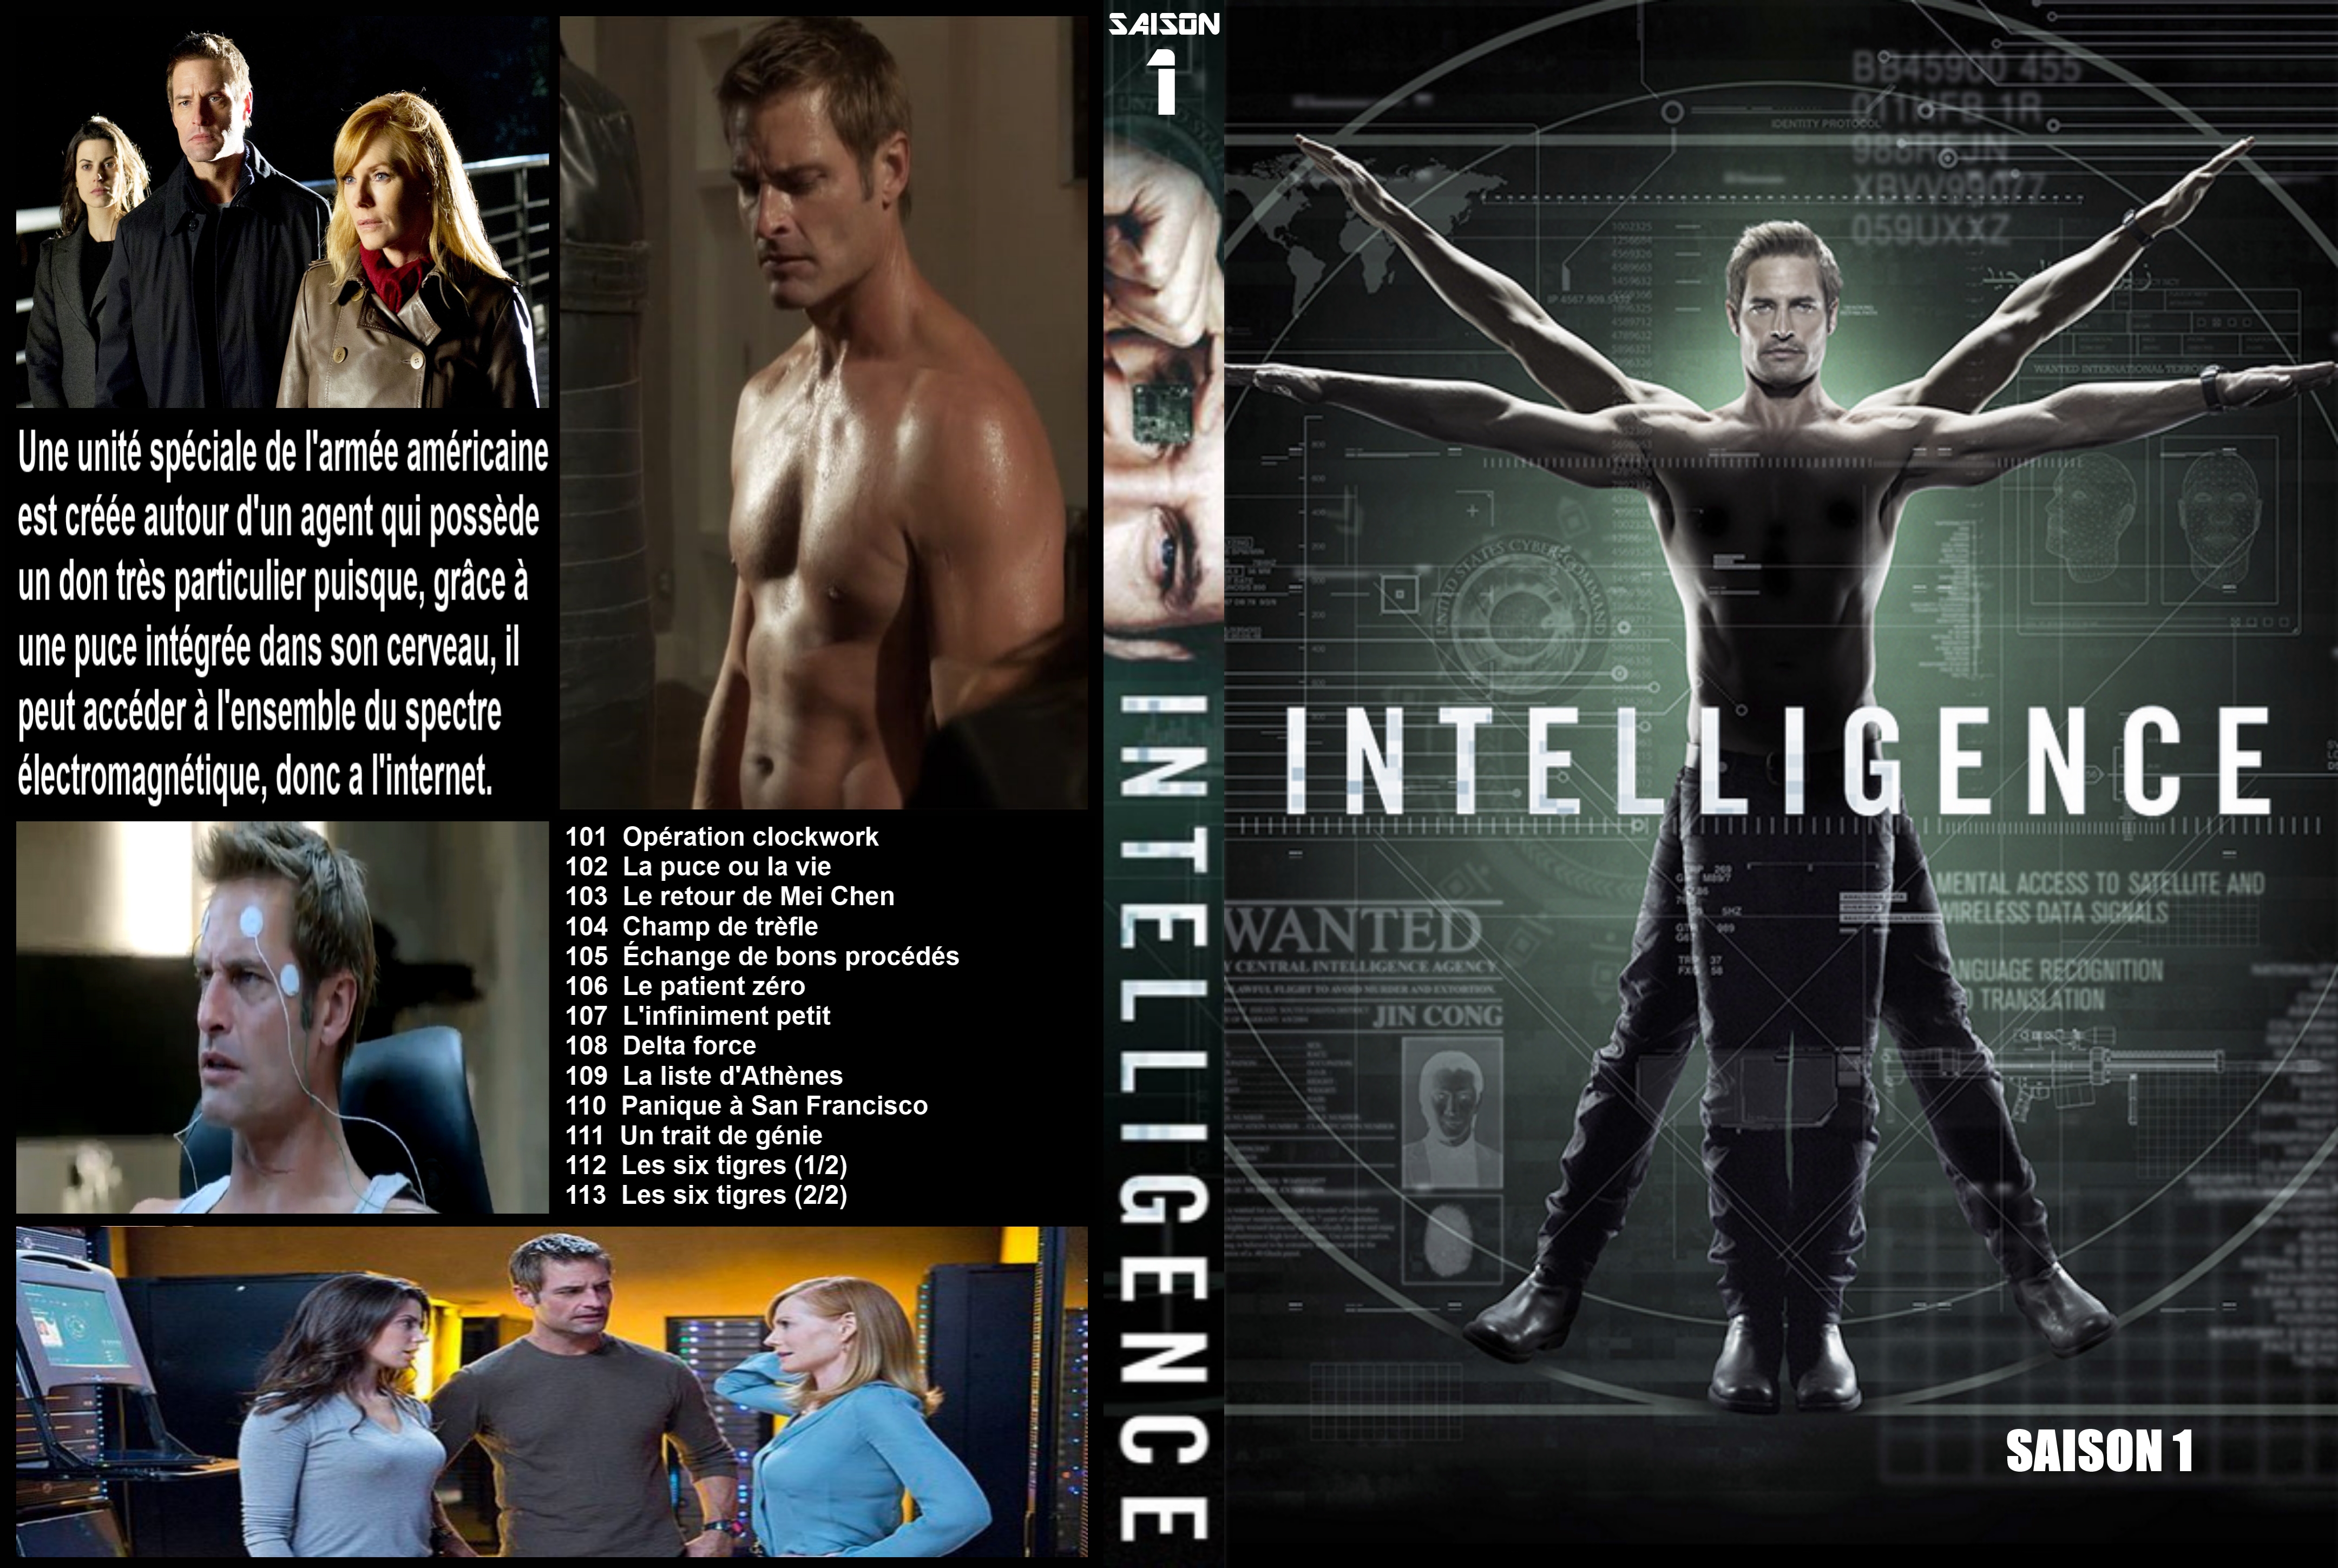 Jaquette DVD Intelligence saison 1 custom